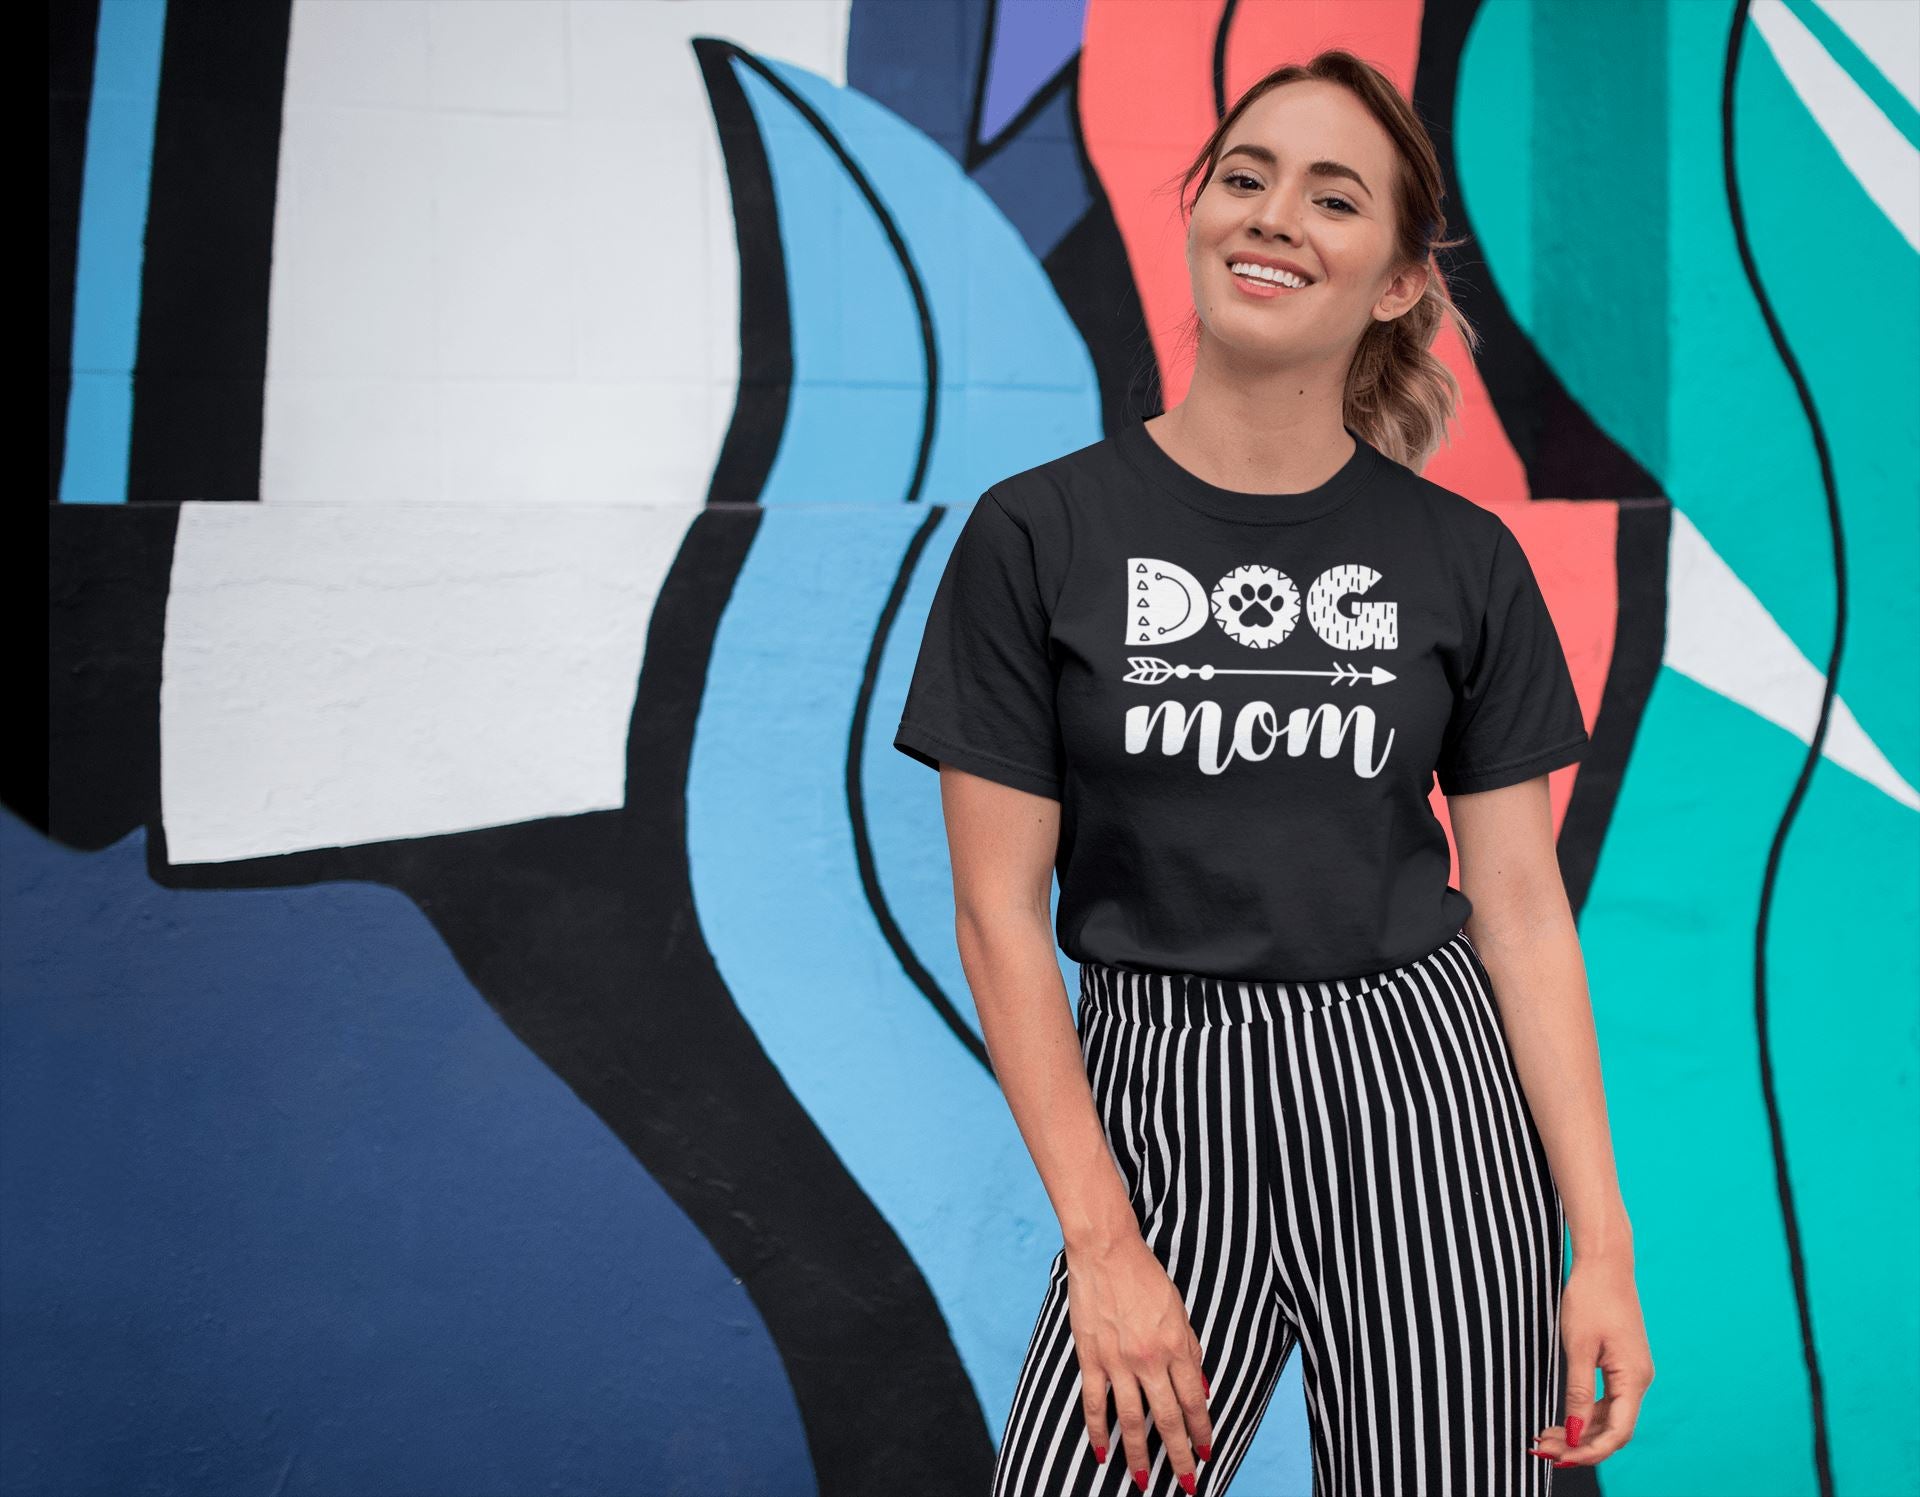 Crazy Dog T-Shirts Womens Shut Up and Fish T Shirt India